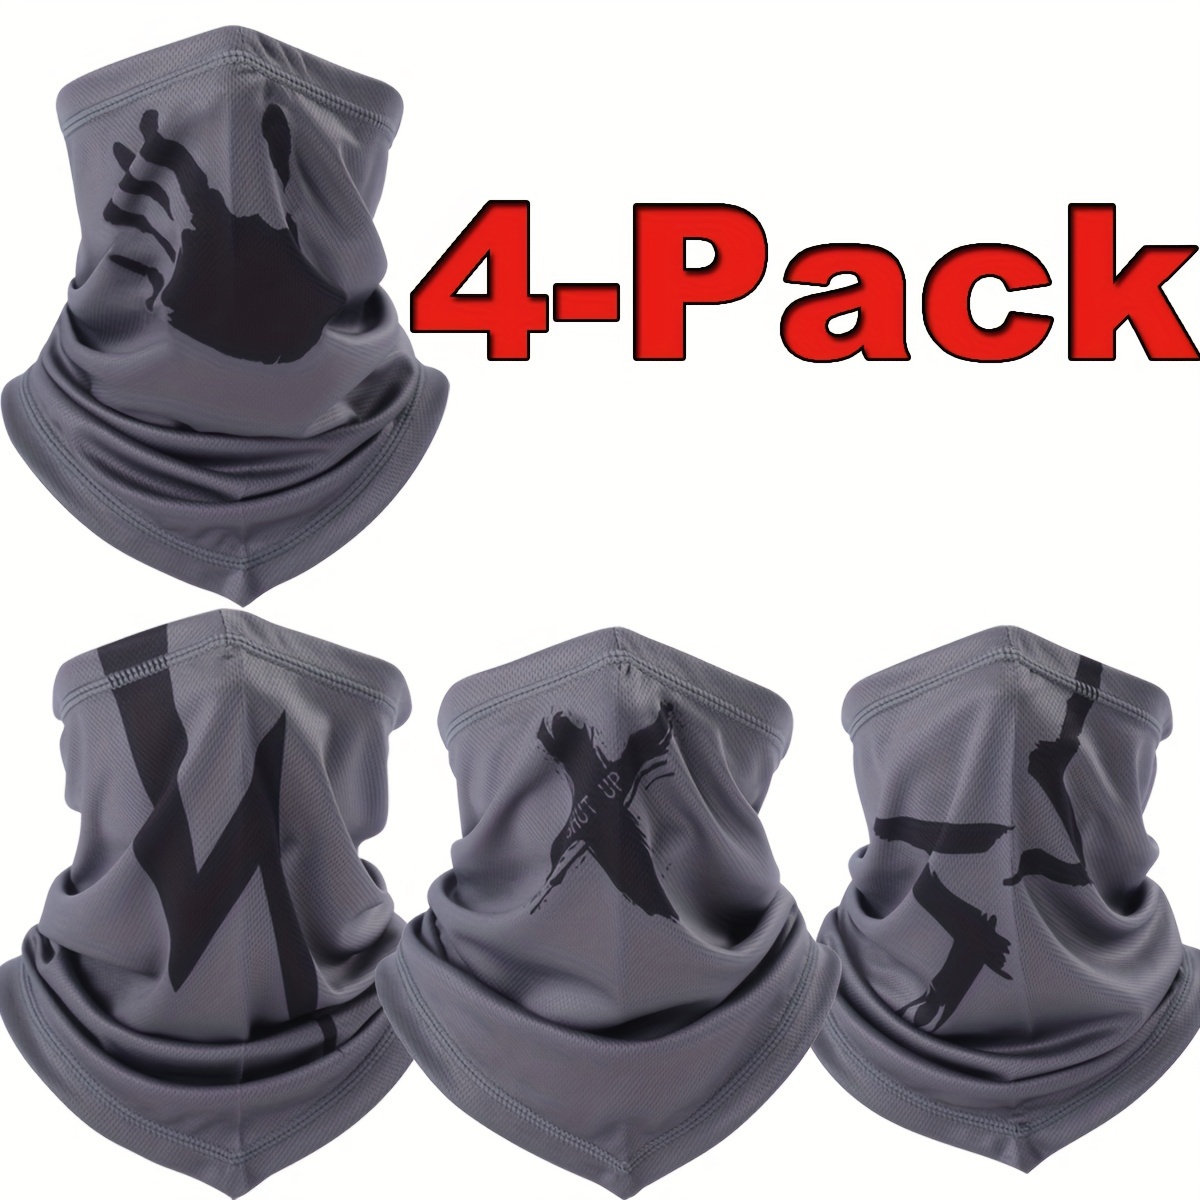 

4-pack Neck Gaiter Balaclava Bandana Gator Face Mask Scart Cover Breathable Sun Protection Headwear For Men Women